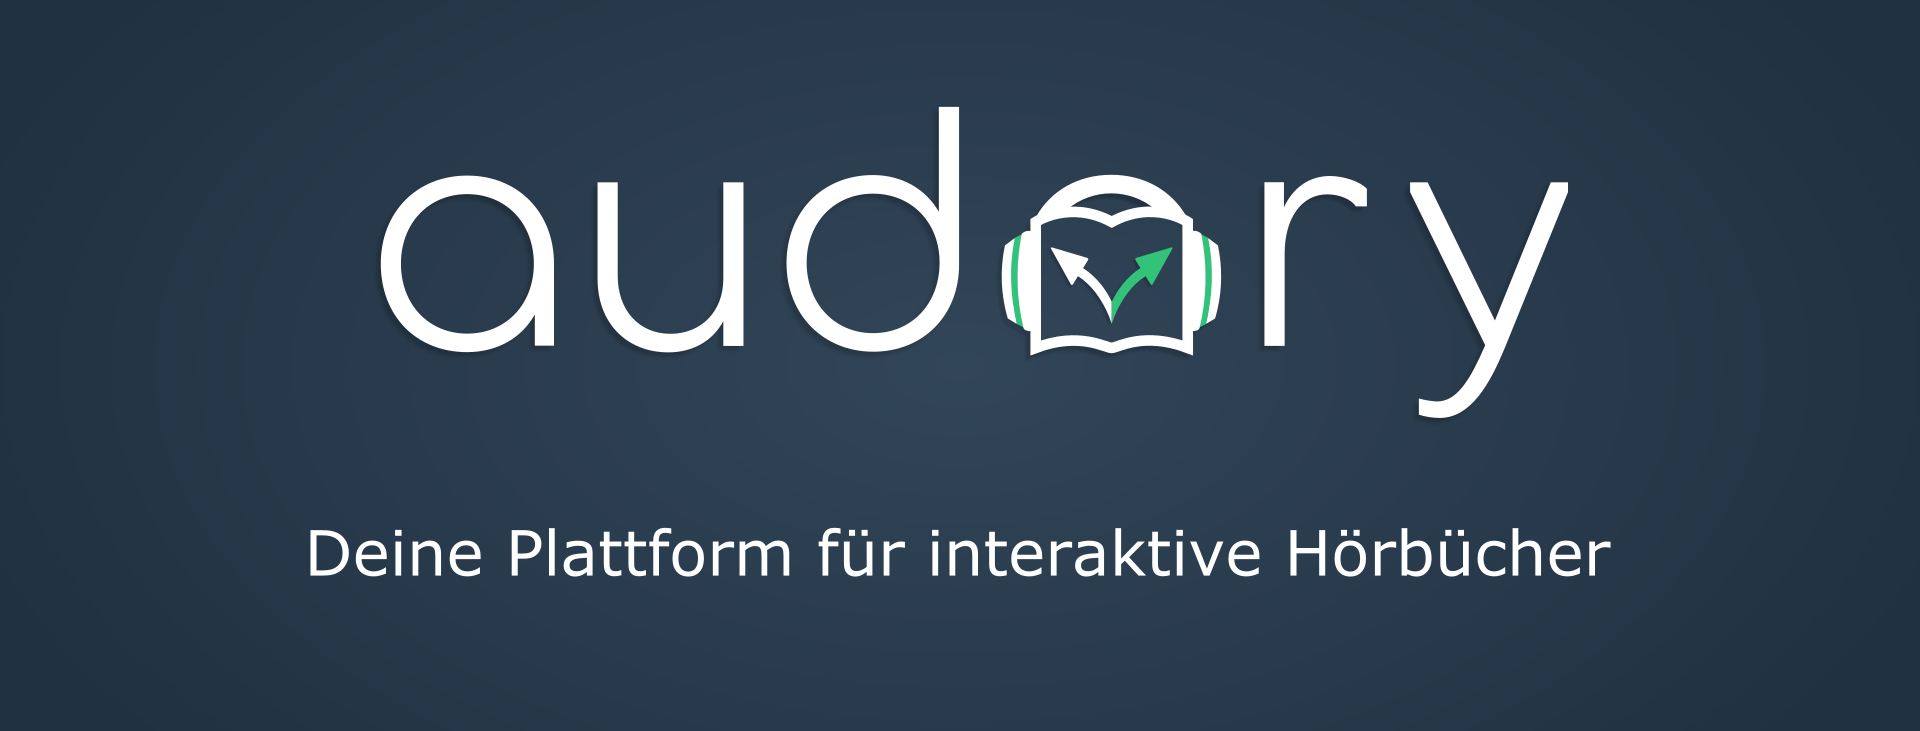 audory / startup from Chemnitz / Background